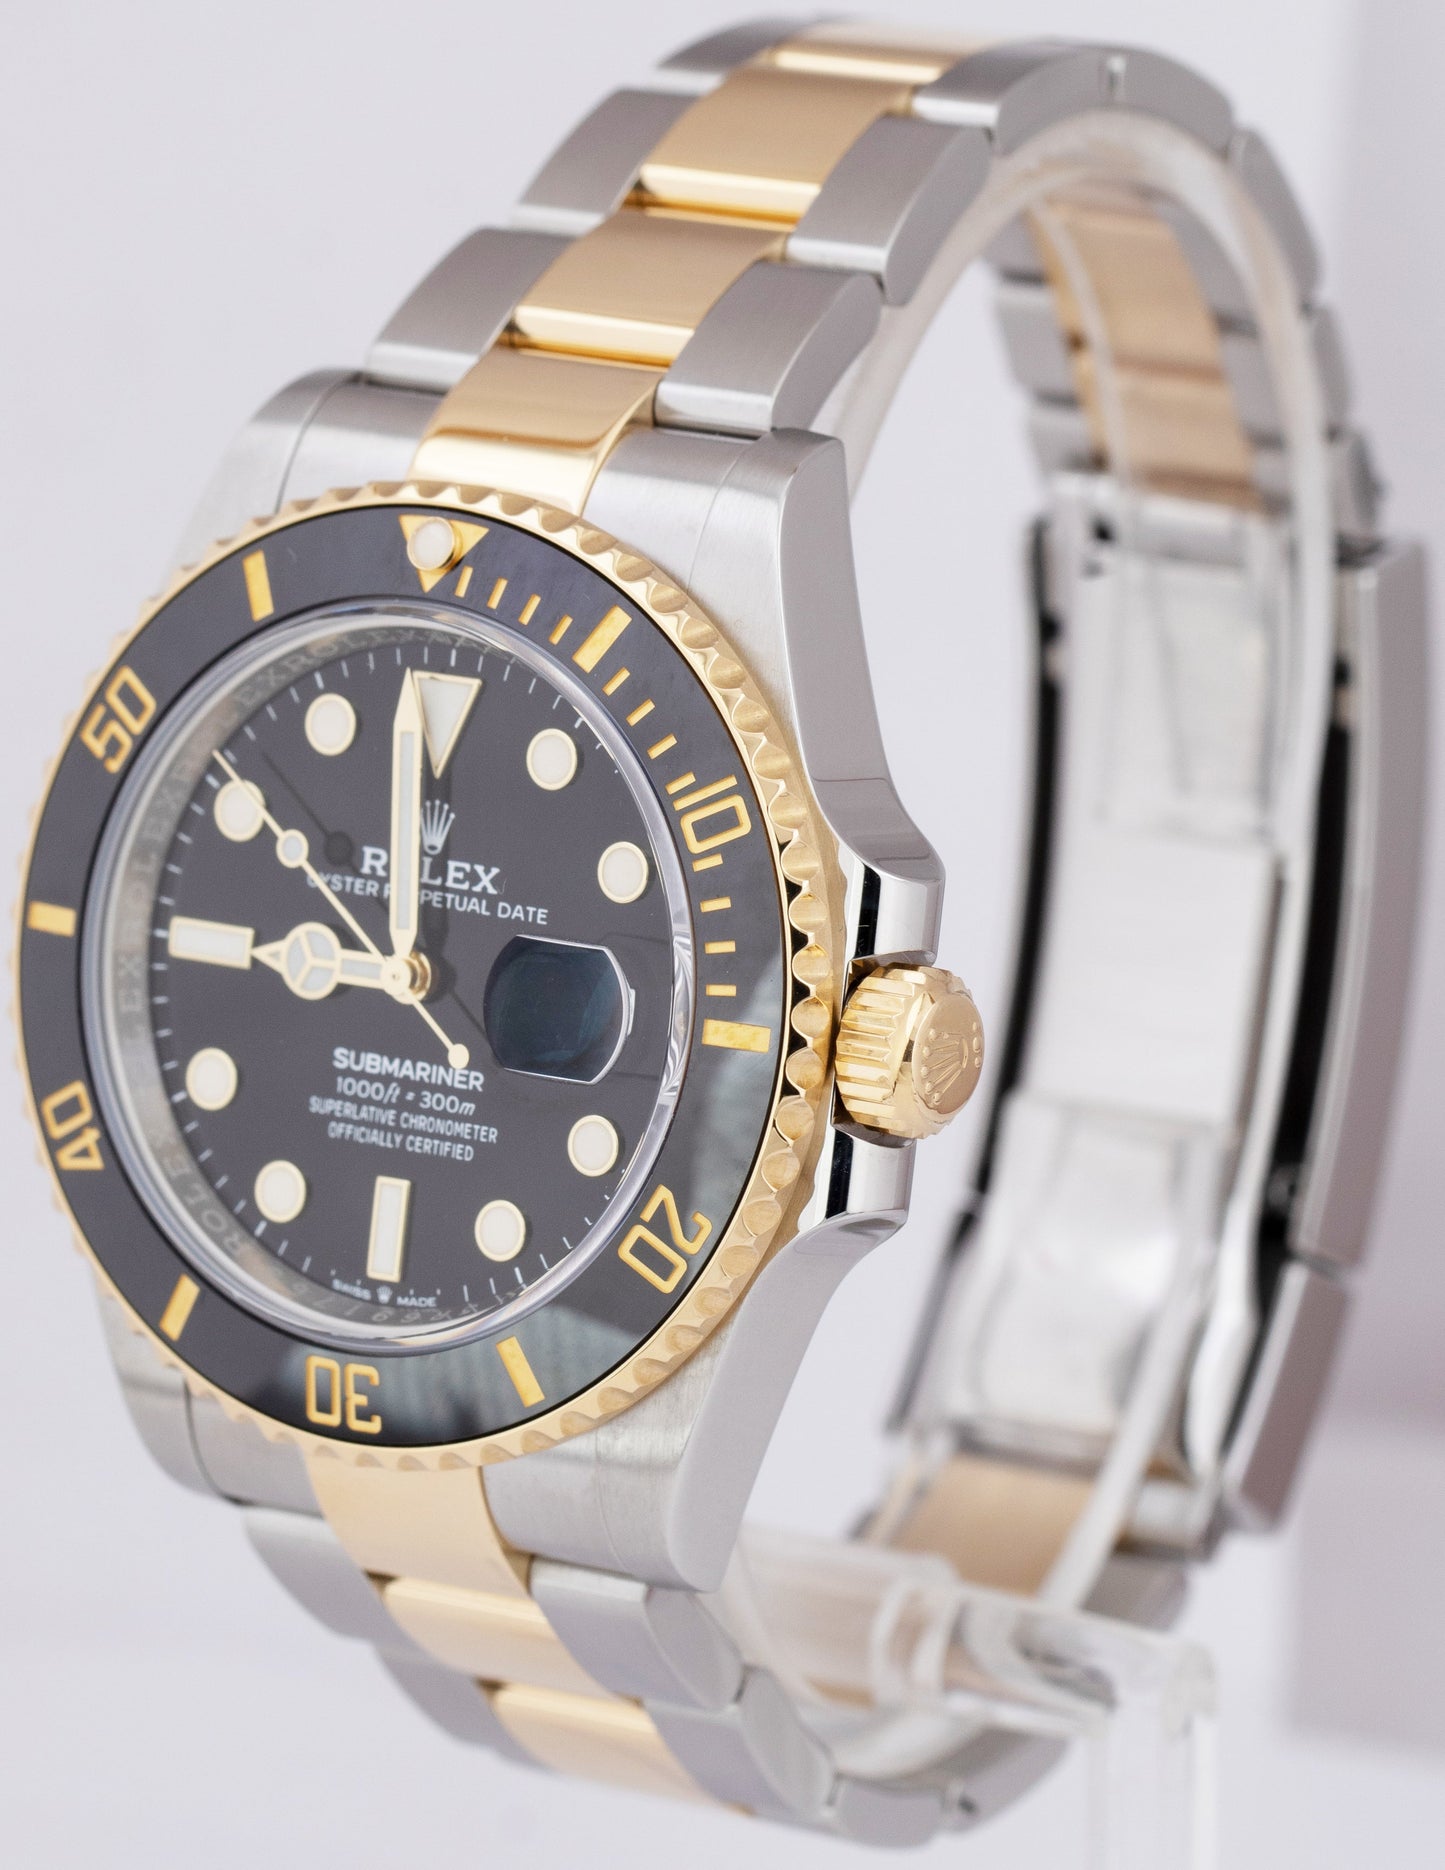 2020 Rolex Submariner Date 41mm Ceramic Two-Tone Gold Black Watch 126613 LN CARD